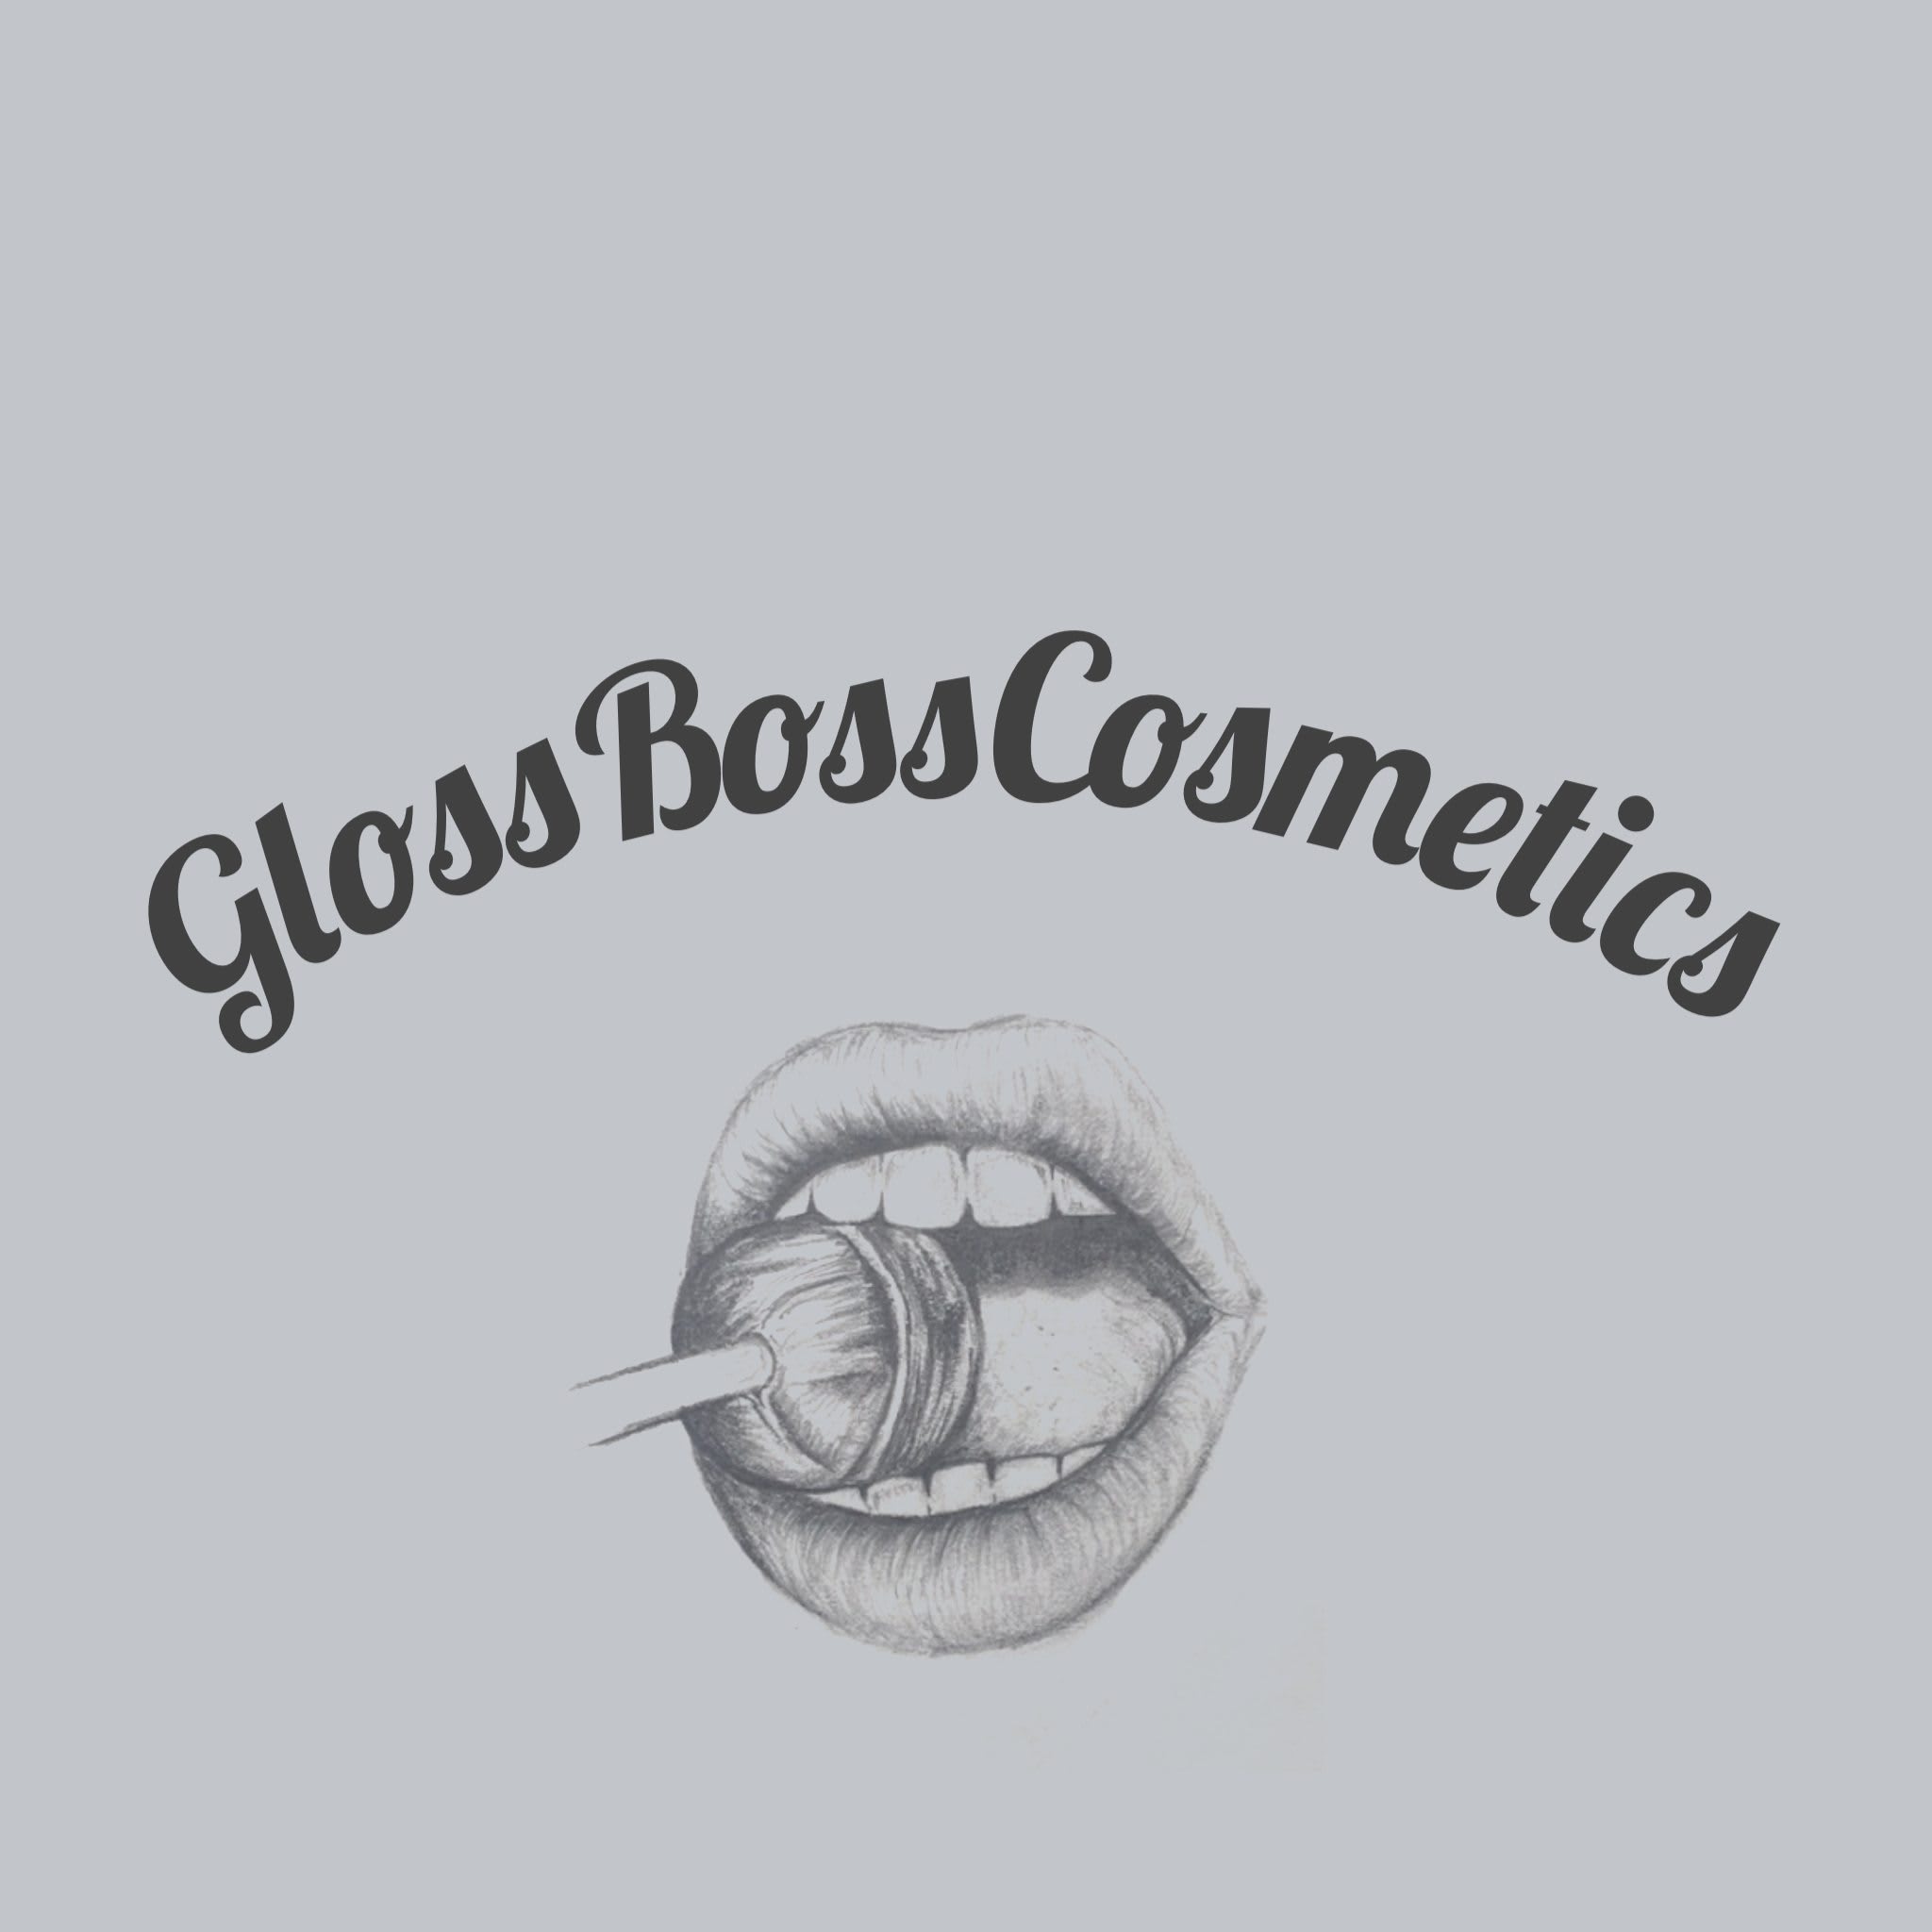 Gloss Boss Cosmetics